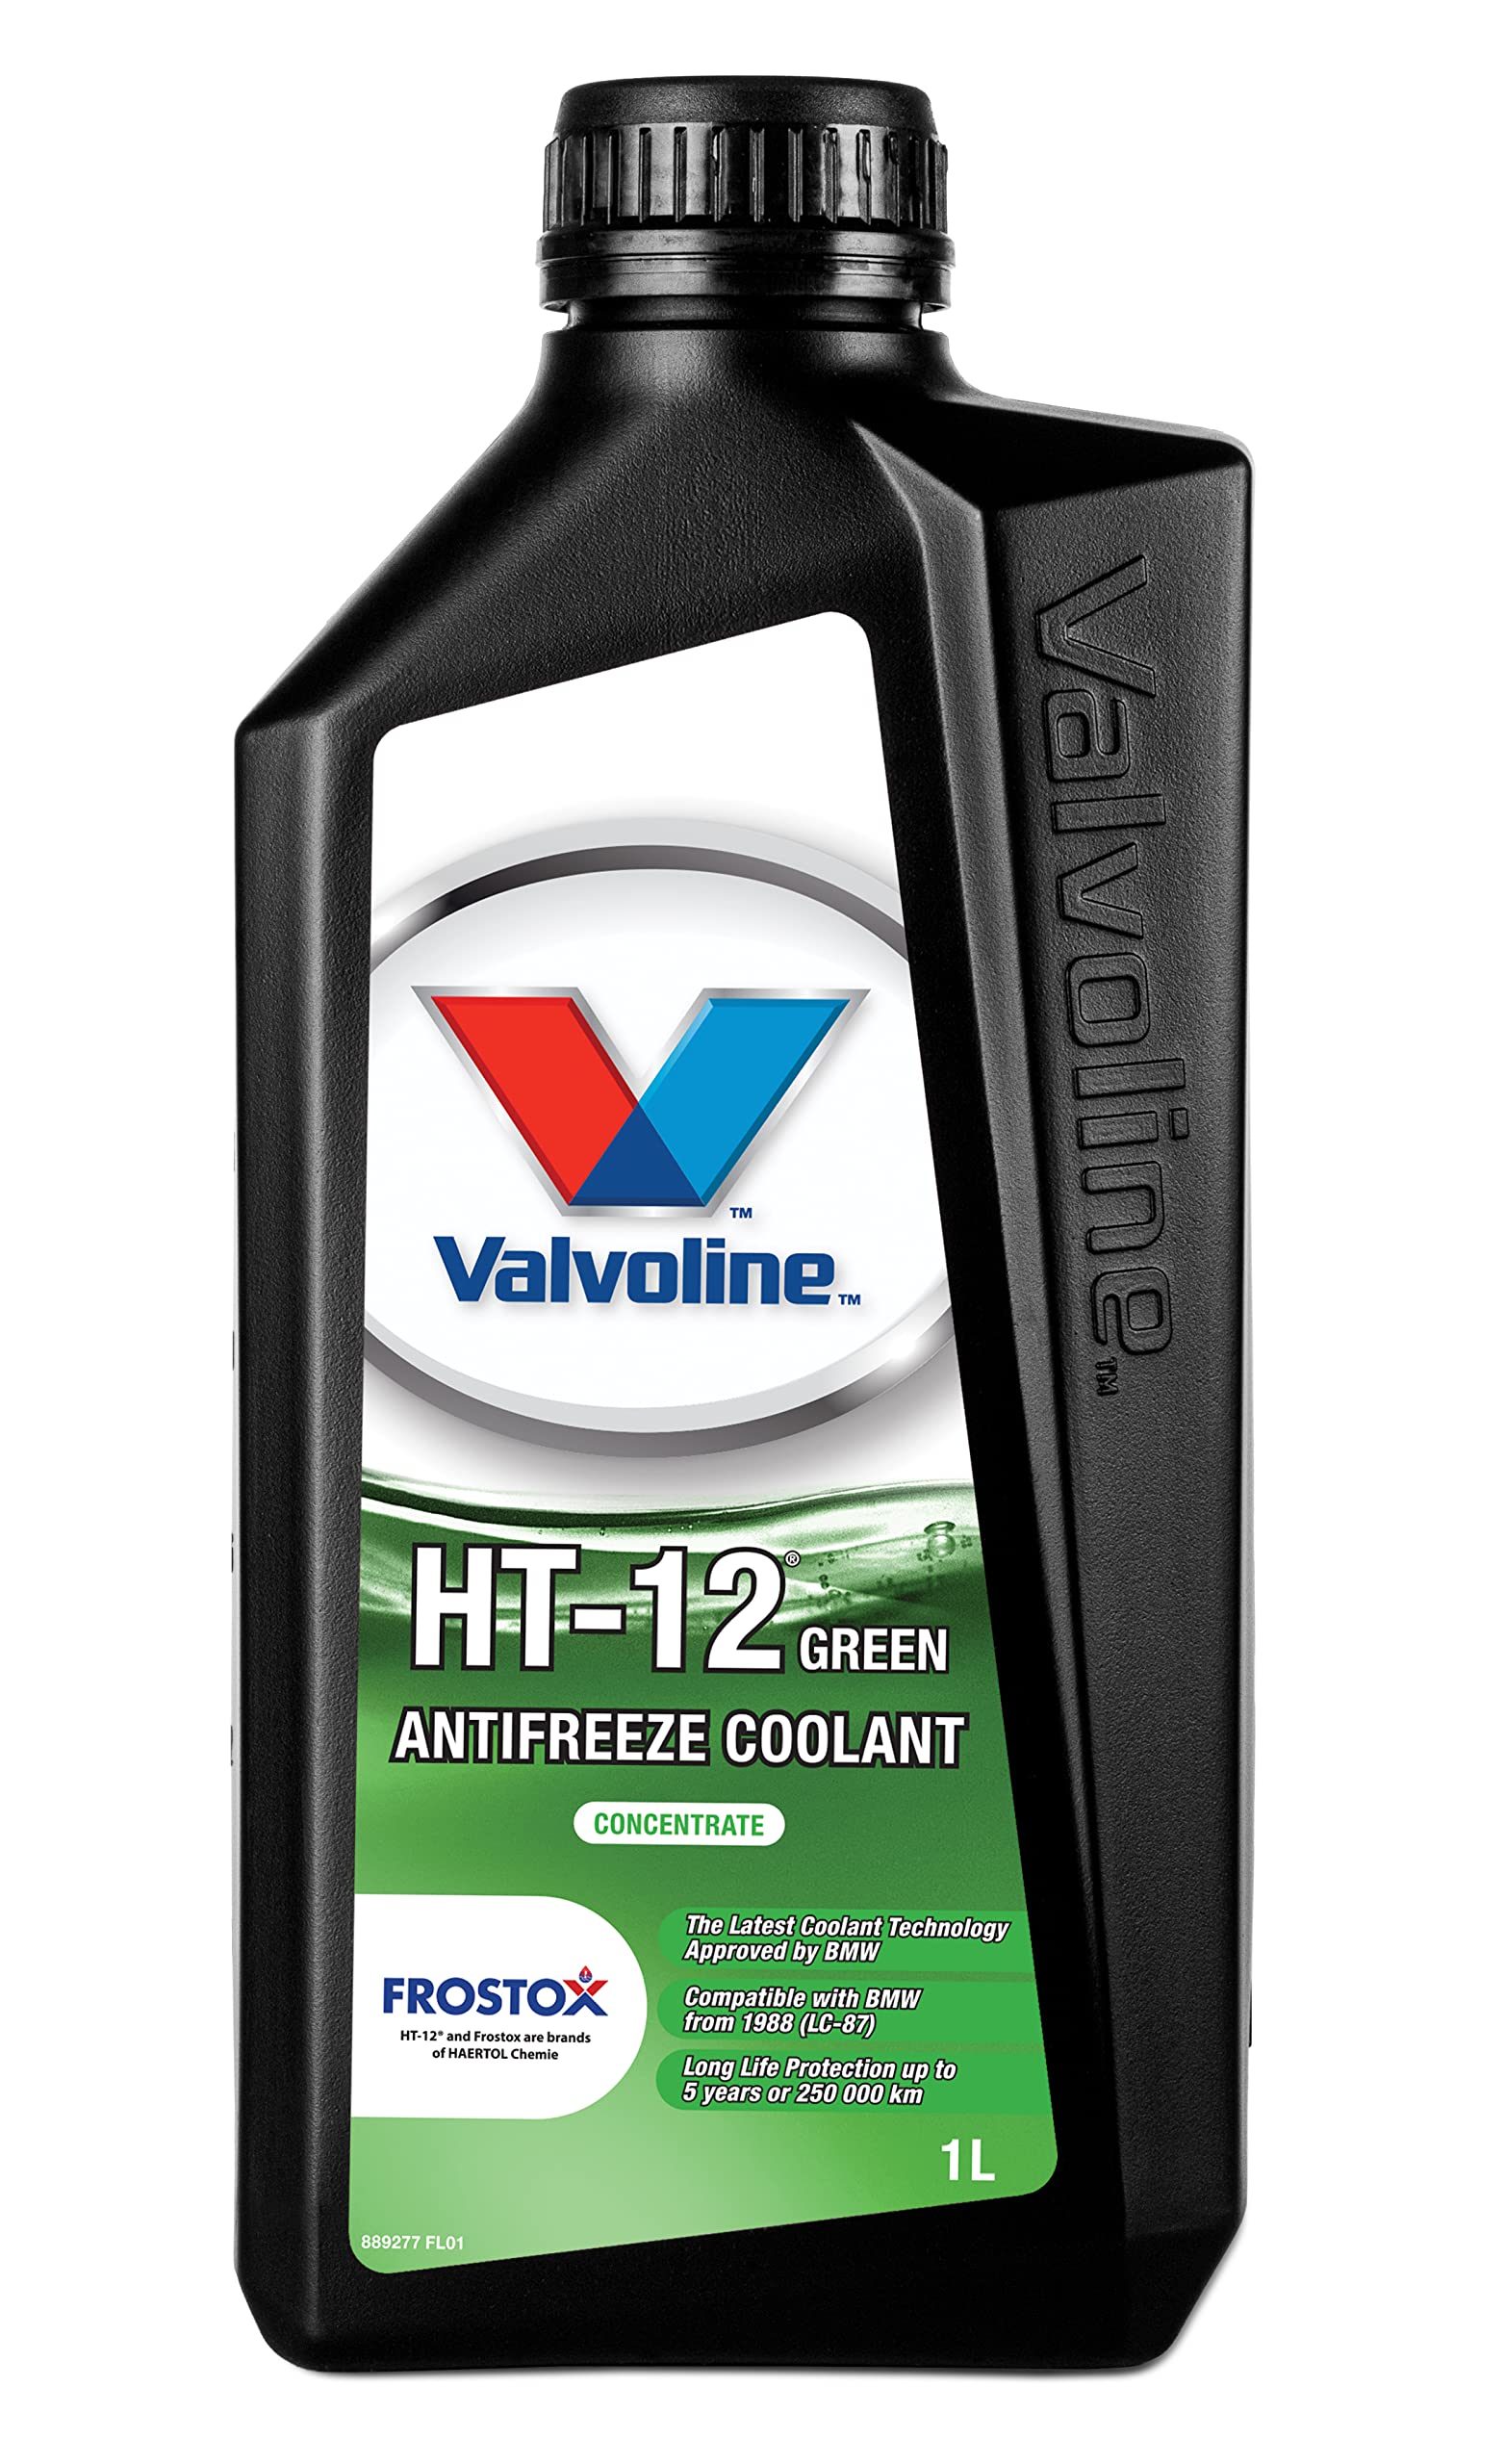 Valvoline Antifreeze Coolant HT-12 Green Ready-to-Use, 1L von Valvoline